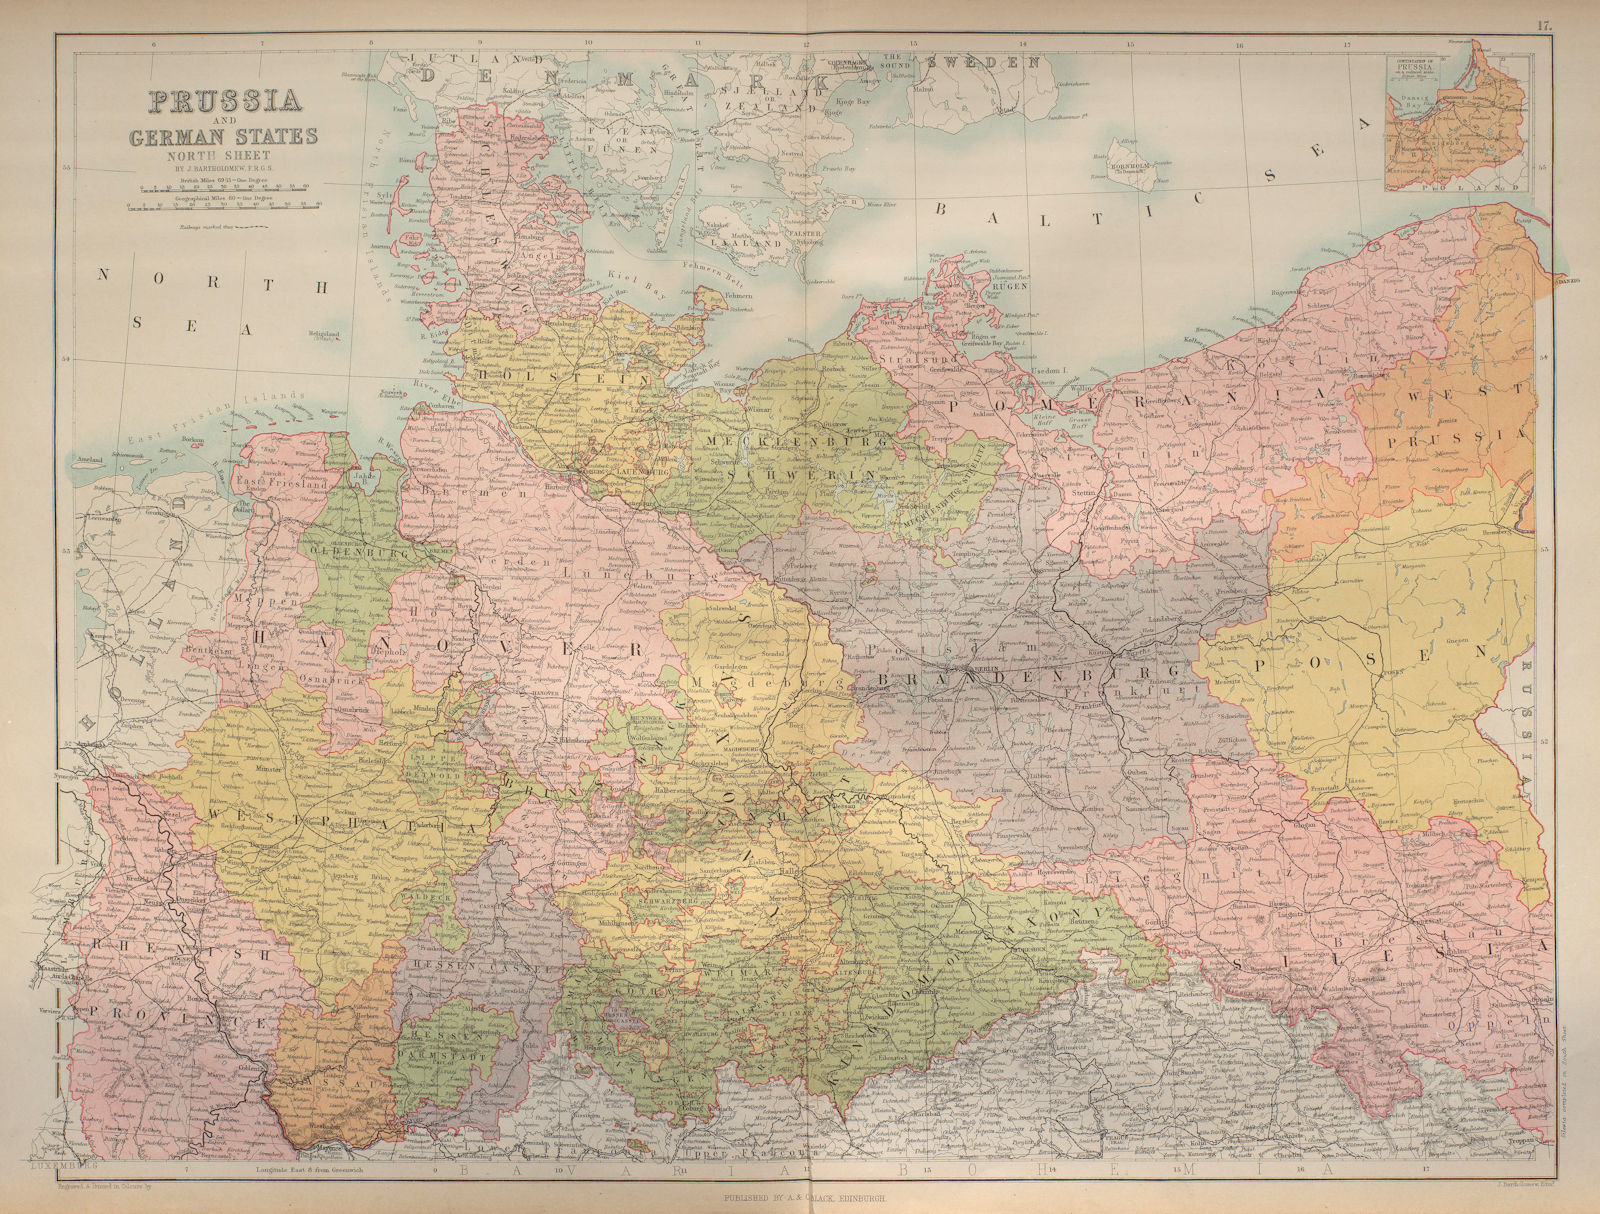 Prussia & North German states. Germany & Poland. BARTHOLOMEW 1870 old map